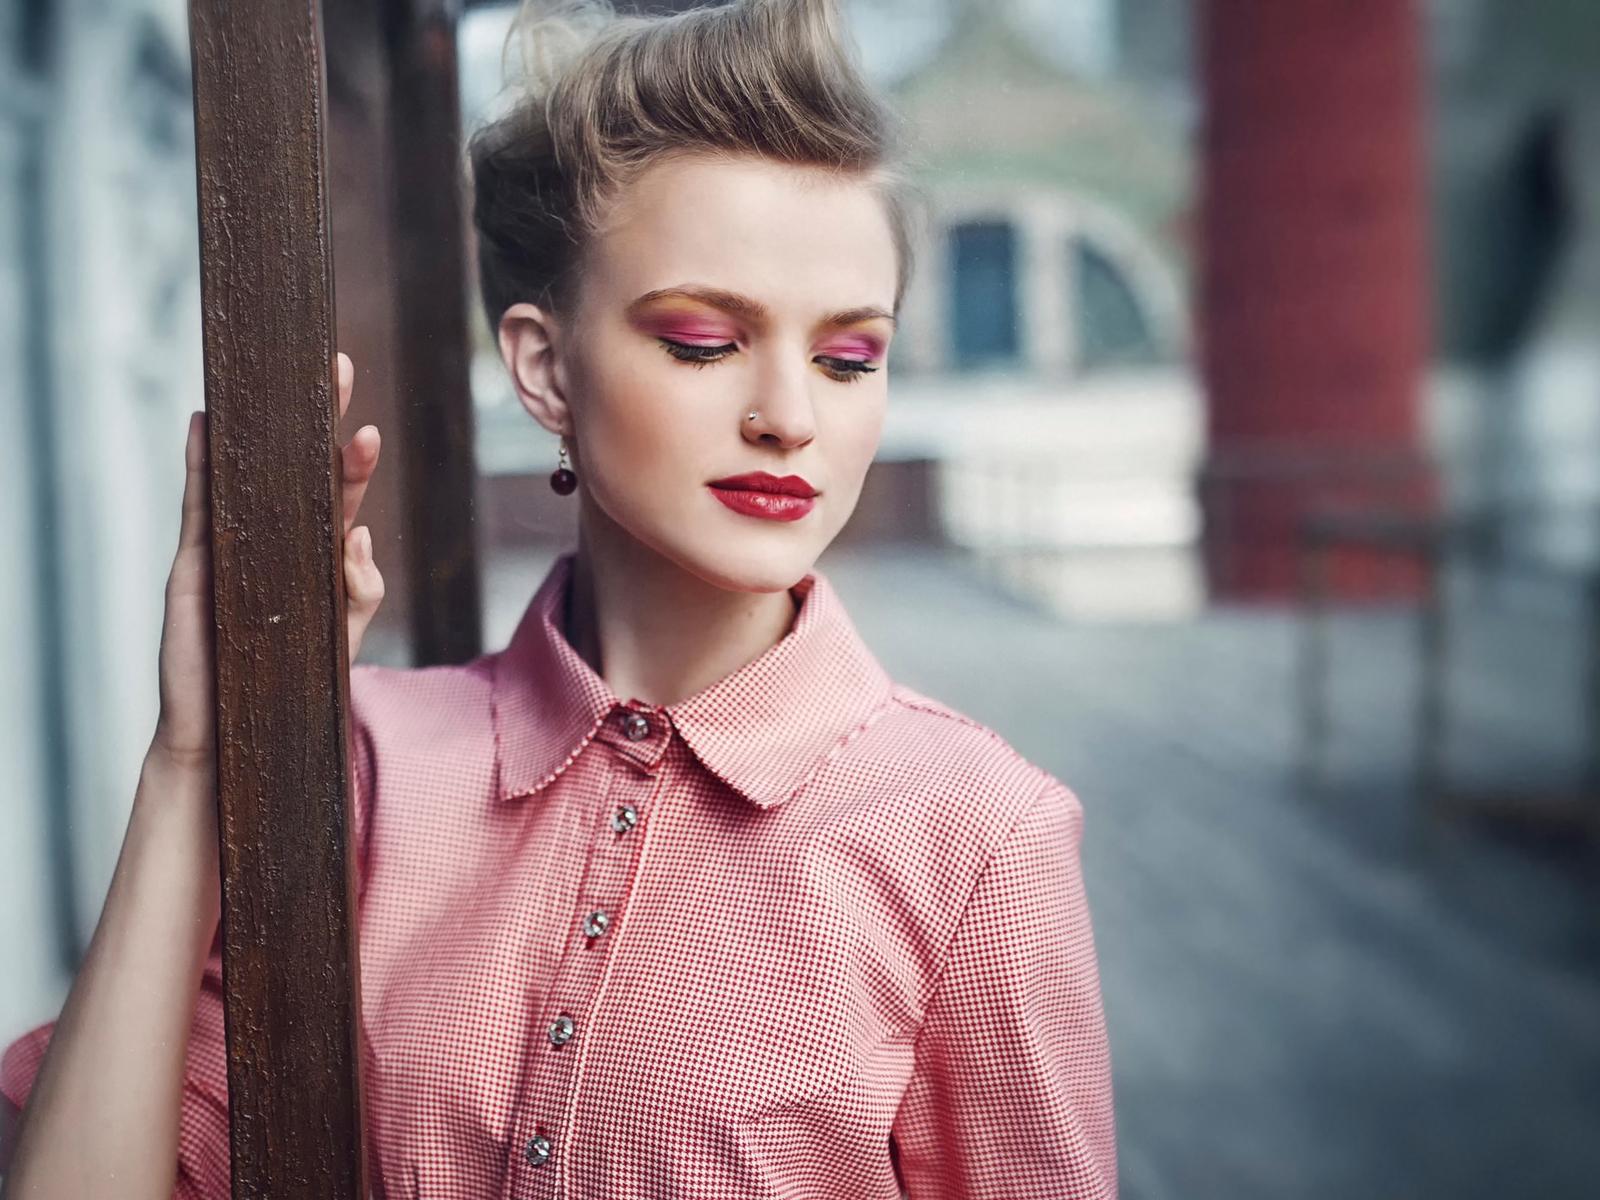 Image: Girl, model, makeup, shirt, red, plaid, Alena Emelyanova, blurred background